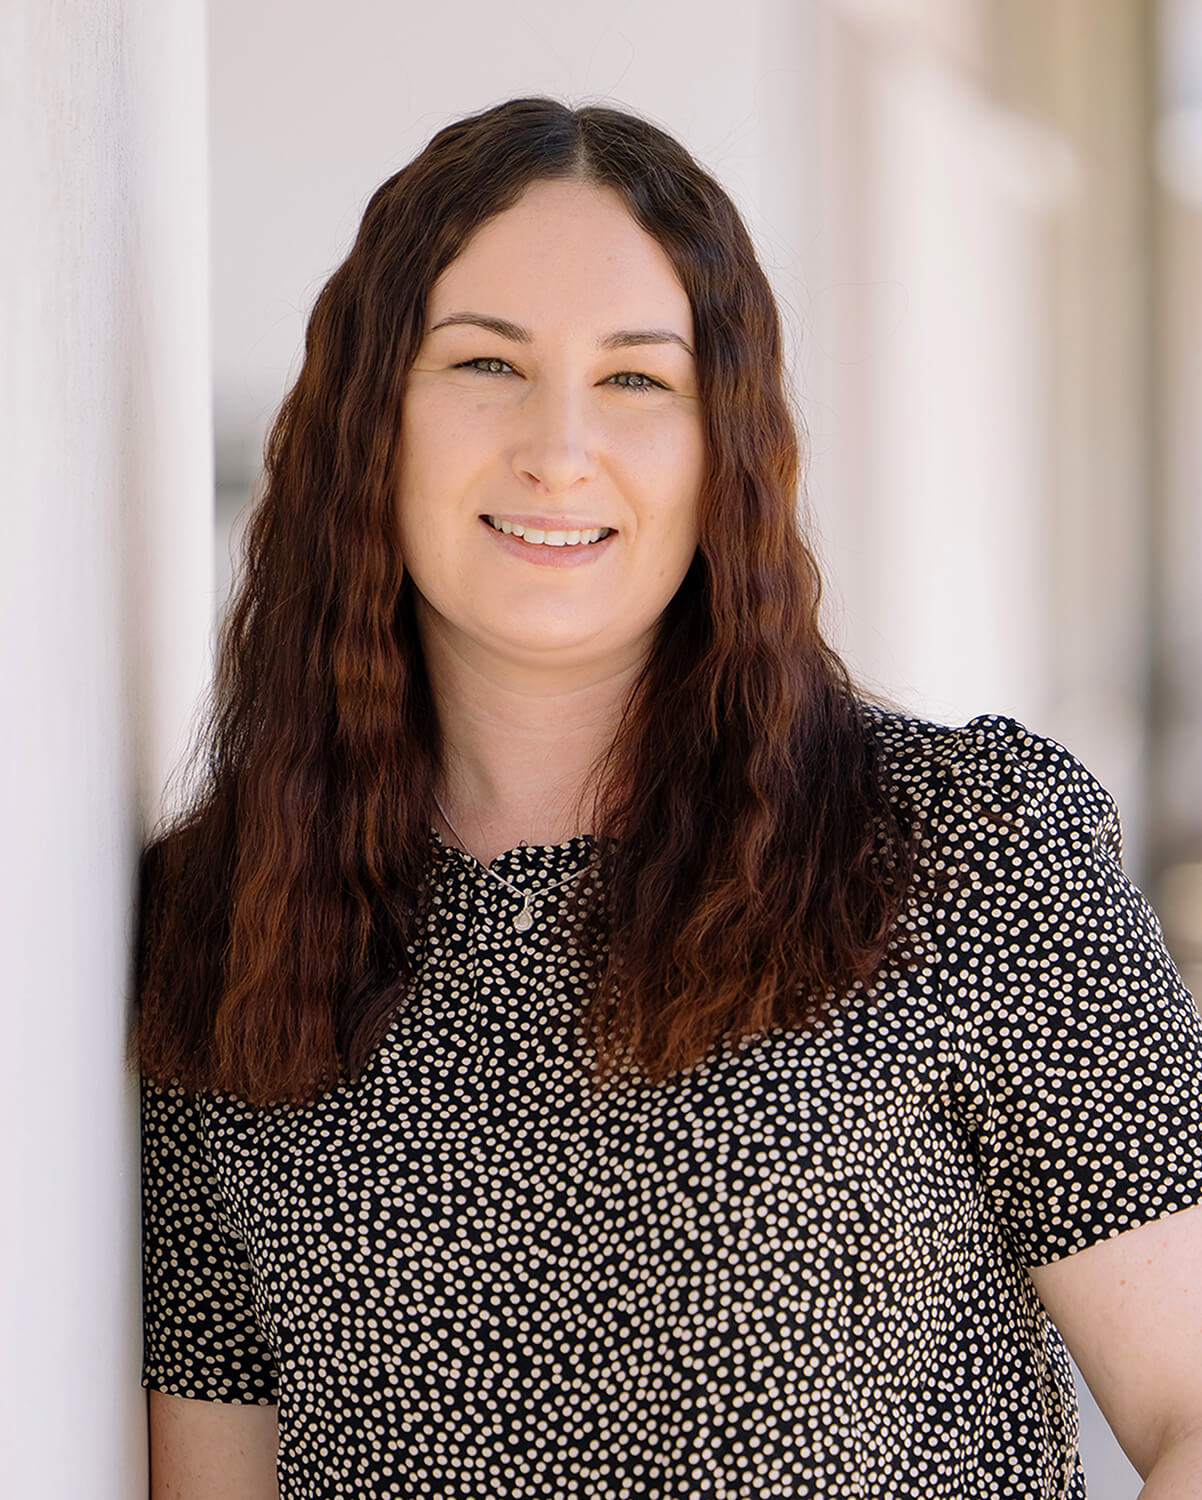 Sarah Ritchie, Recruitment Administrator at Evolve Mining & Resources